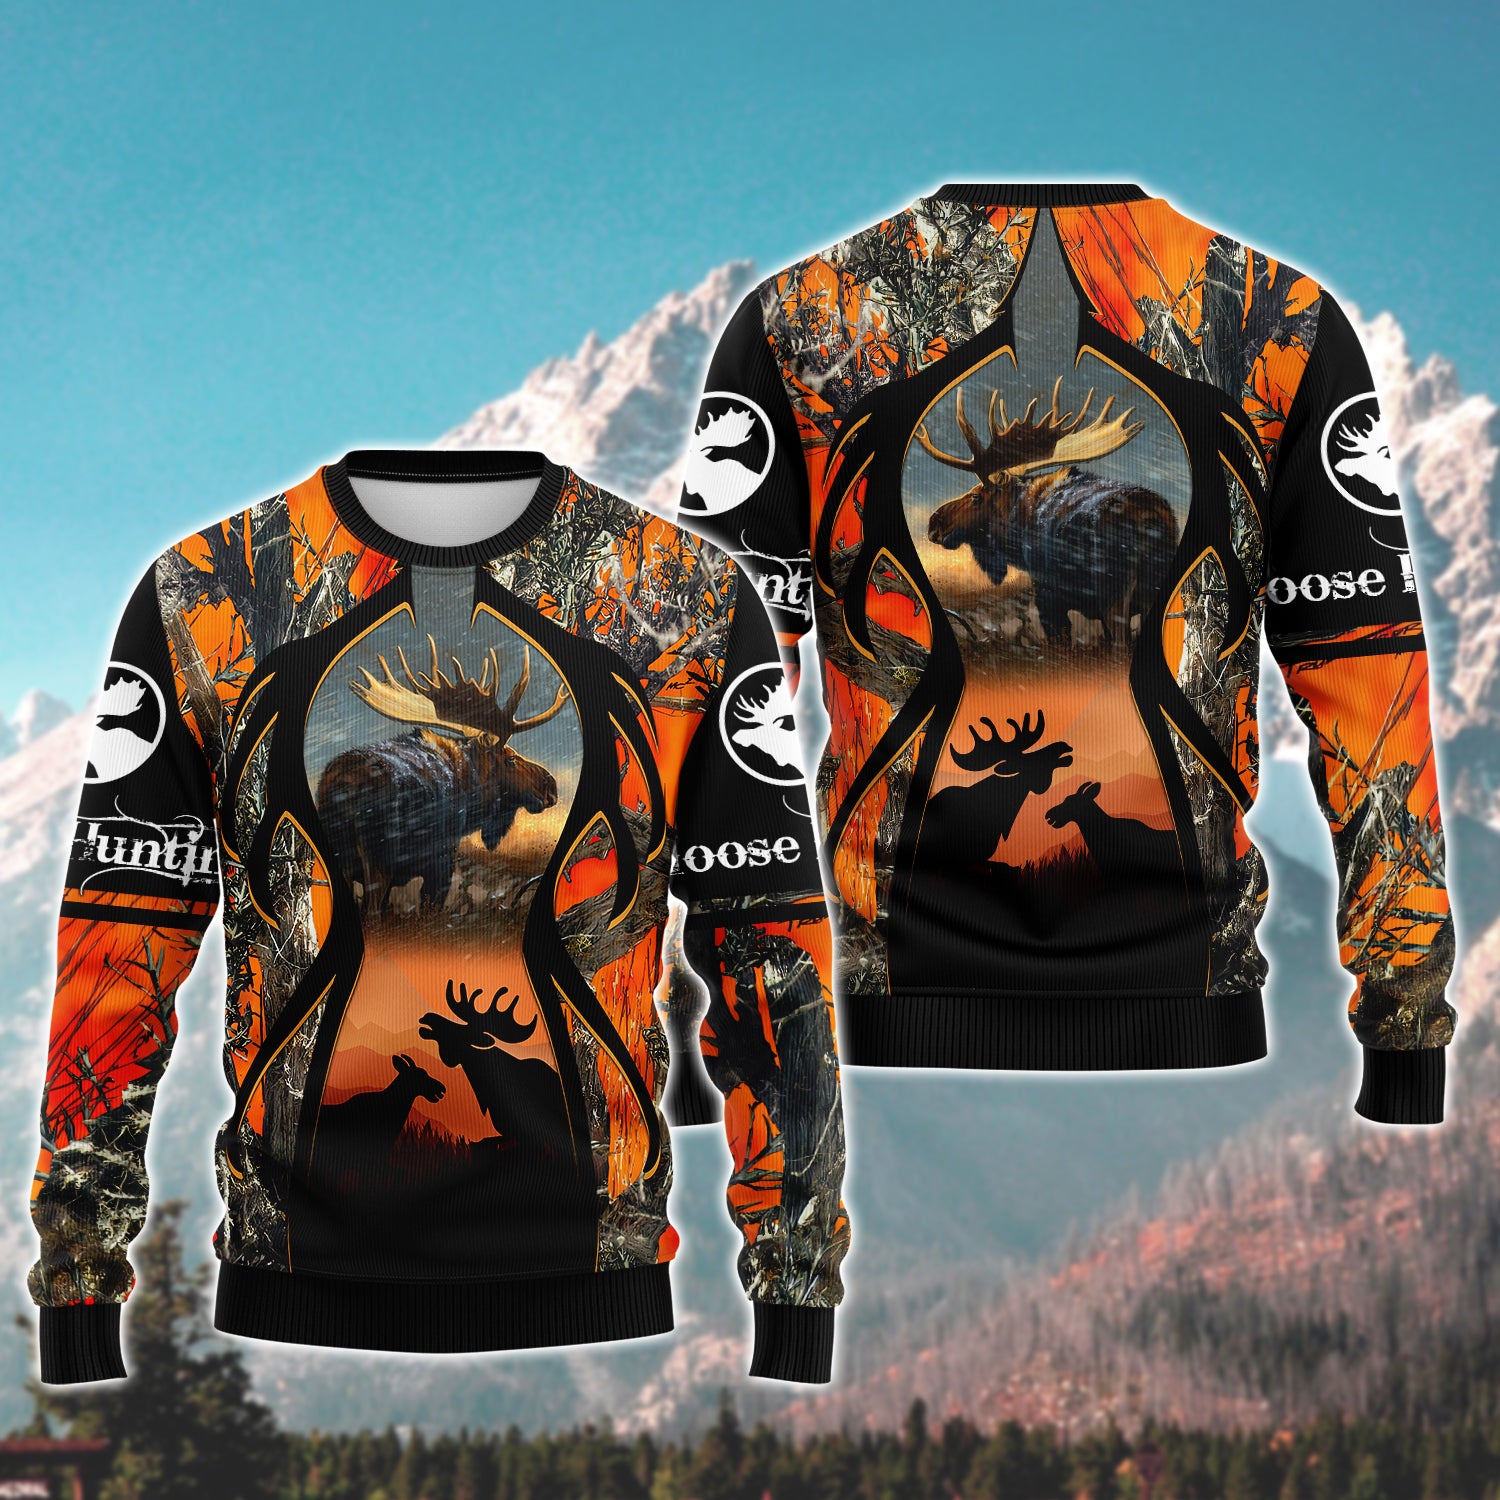 Moose Hunting - 3D Full Print Shirts - Tad 524